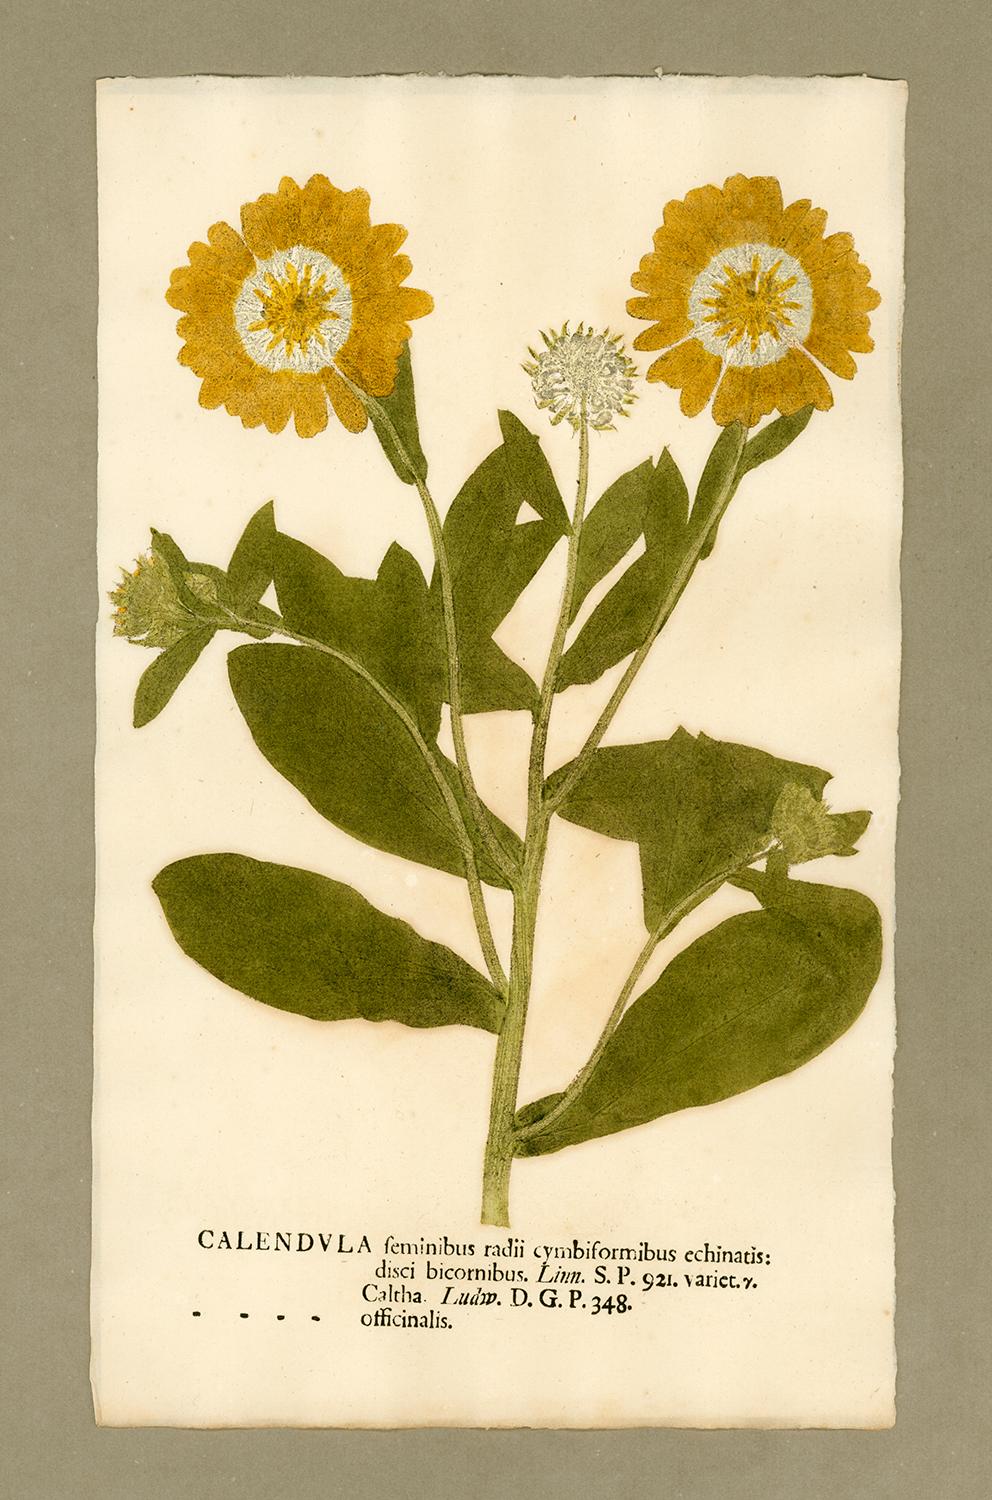 Johann Hieronymus Kniphof  Black and White Photograph - Botanica in Originali, seu Herbarium Vivum - "Nature Printed Plants" -22